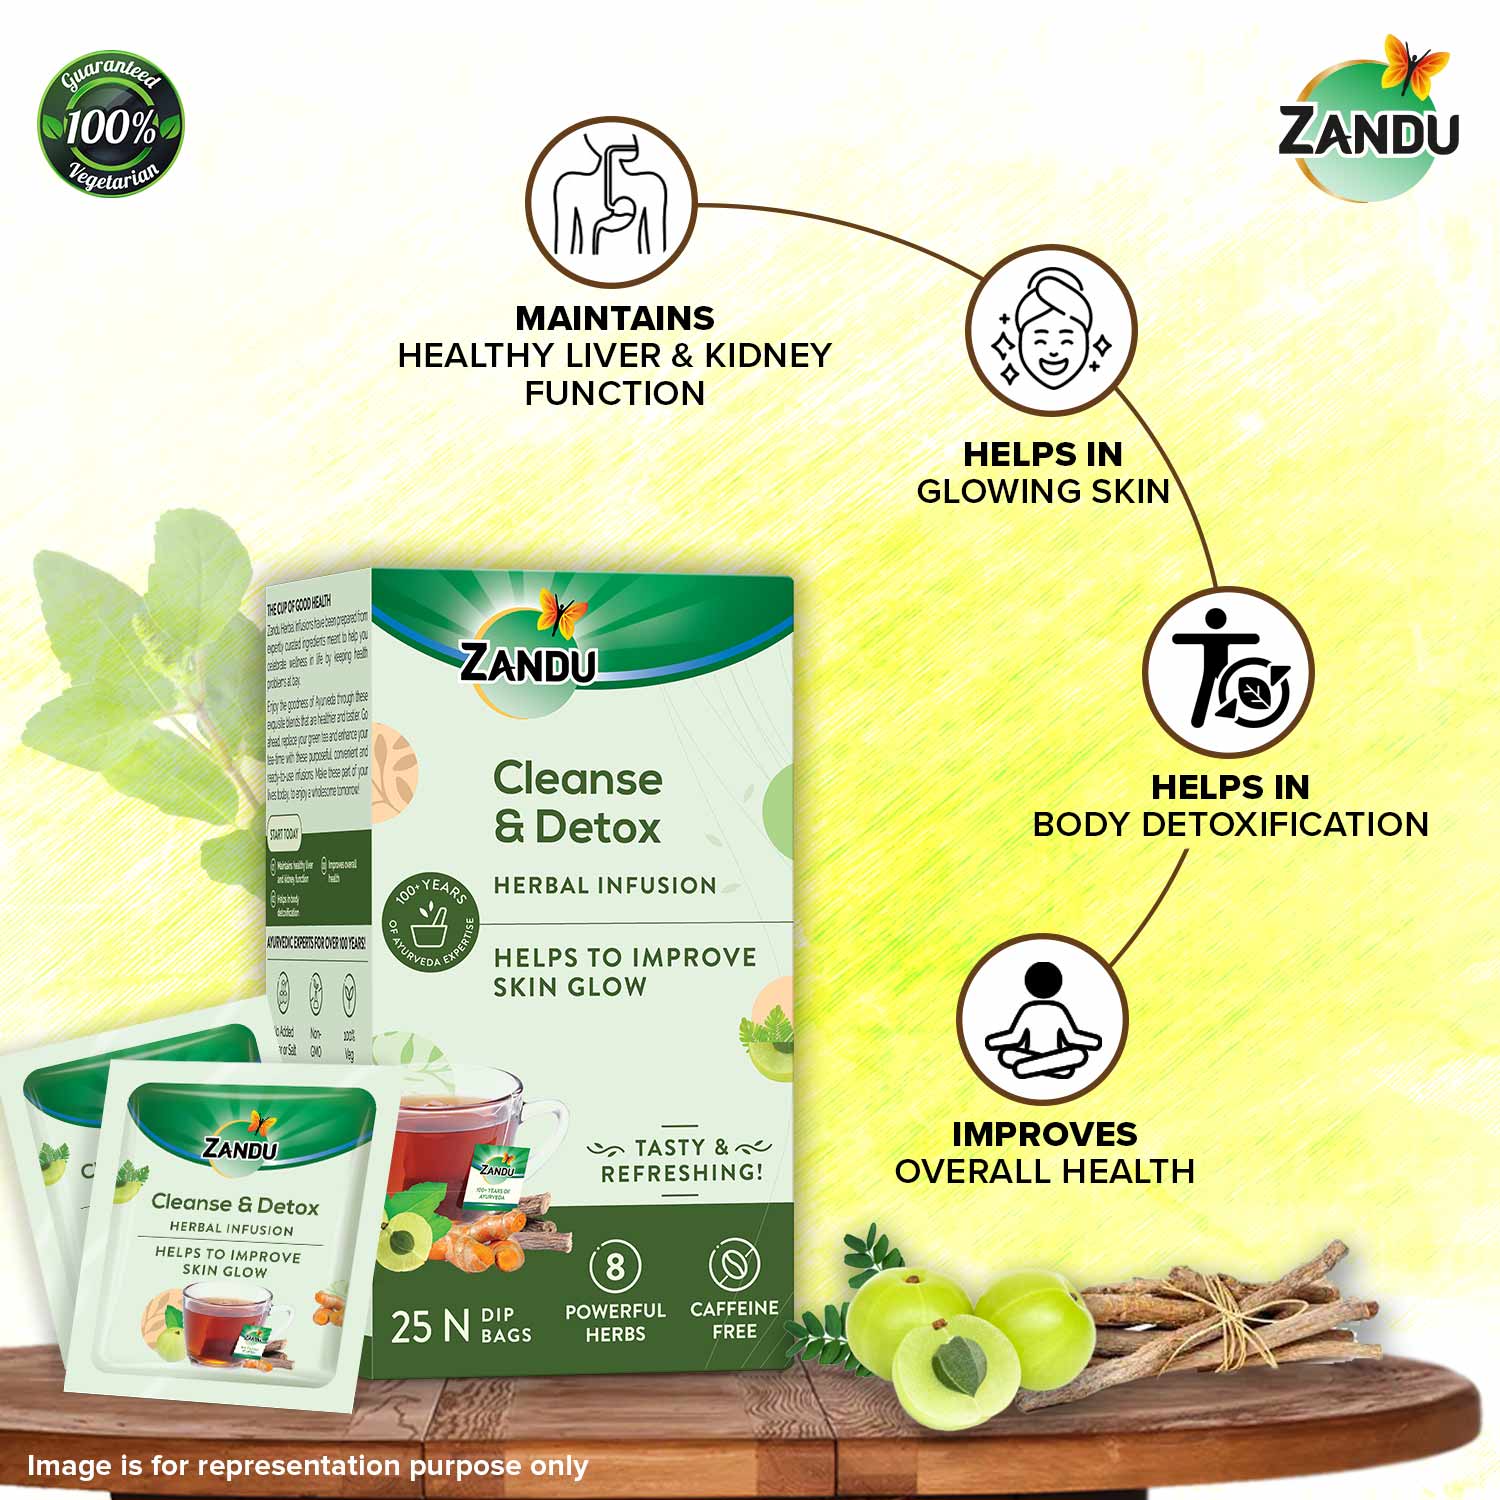 Zandu Cleanse & Detox Herbal Tea benefits